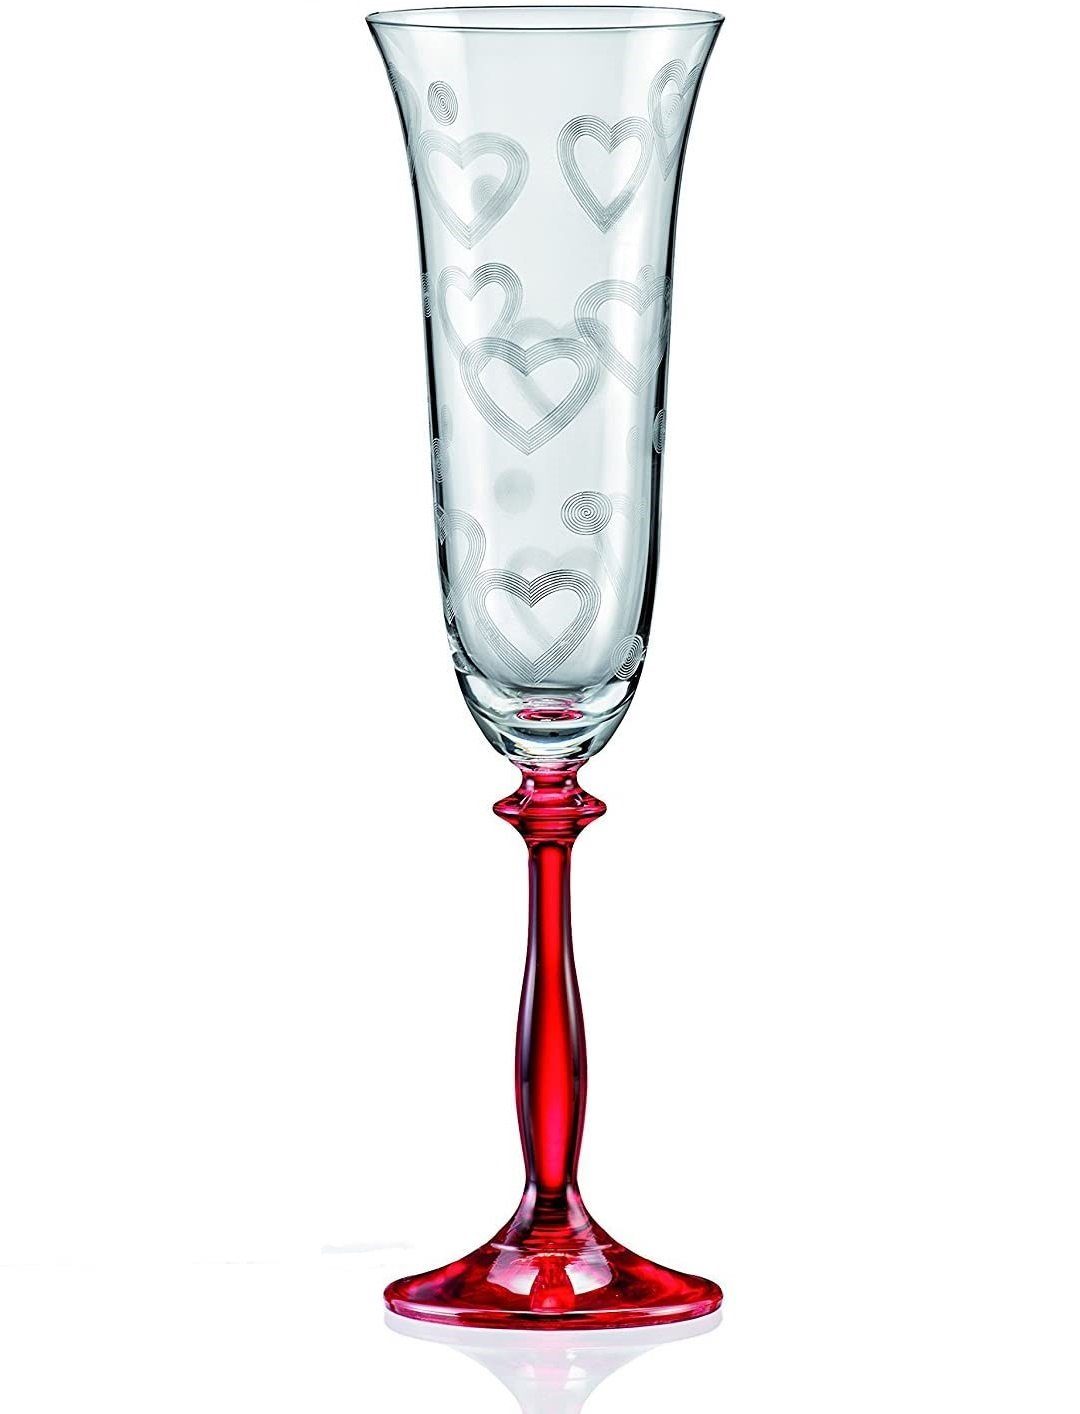 Crystalex Sektglas Love 2er Set 190 ml, Kristallglas, farbig, Herz Gravur